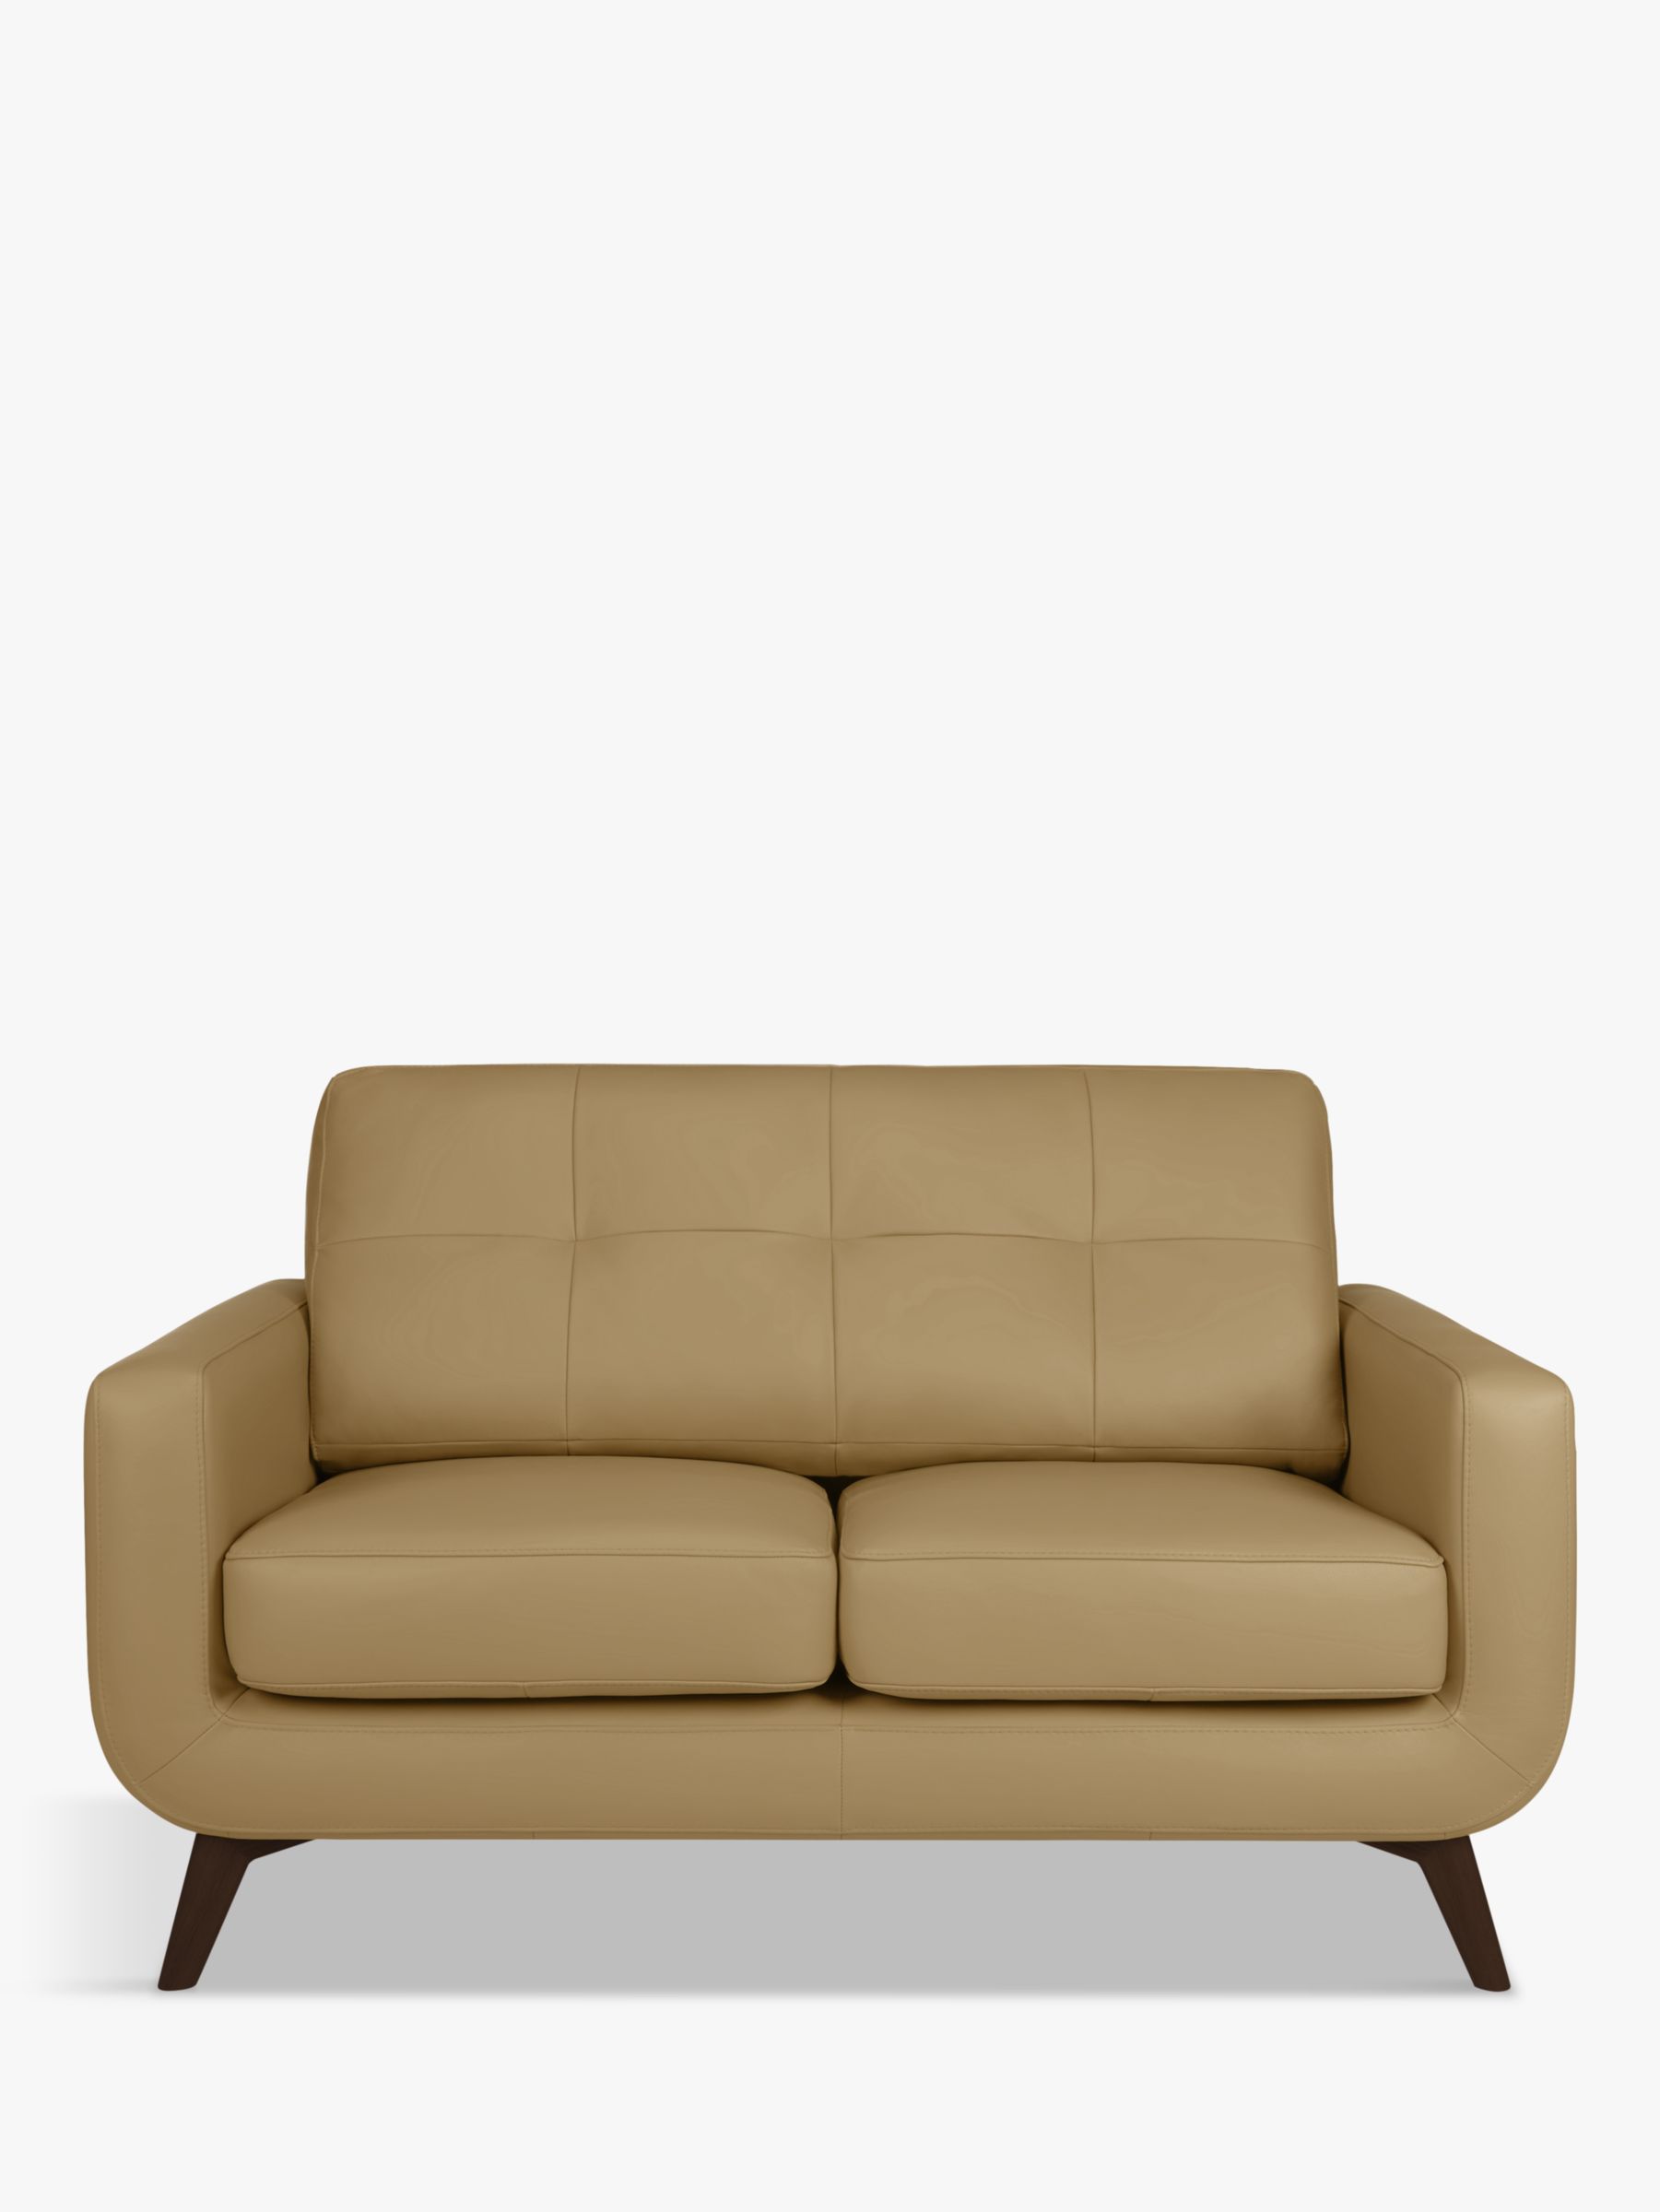 Barbican Range, John Lewis Barbican Small 2 Seater Leather Sofa, Dark Leg, Sellvagio Parchment